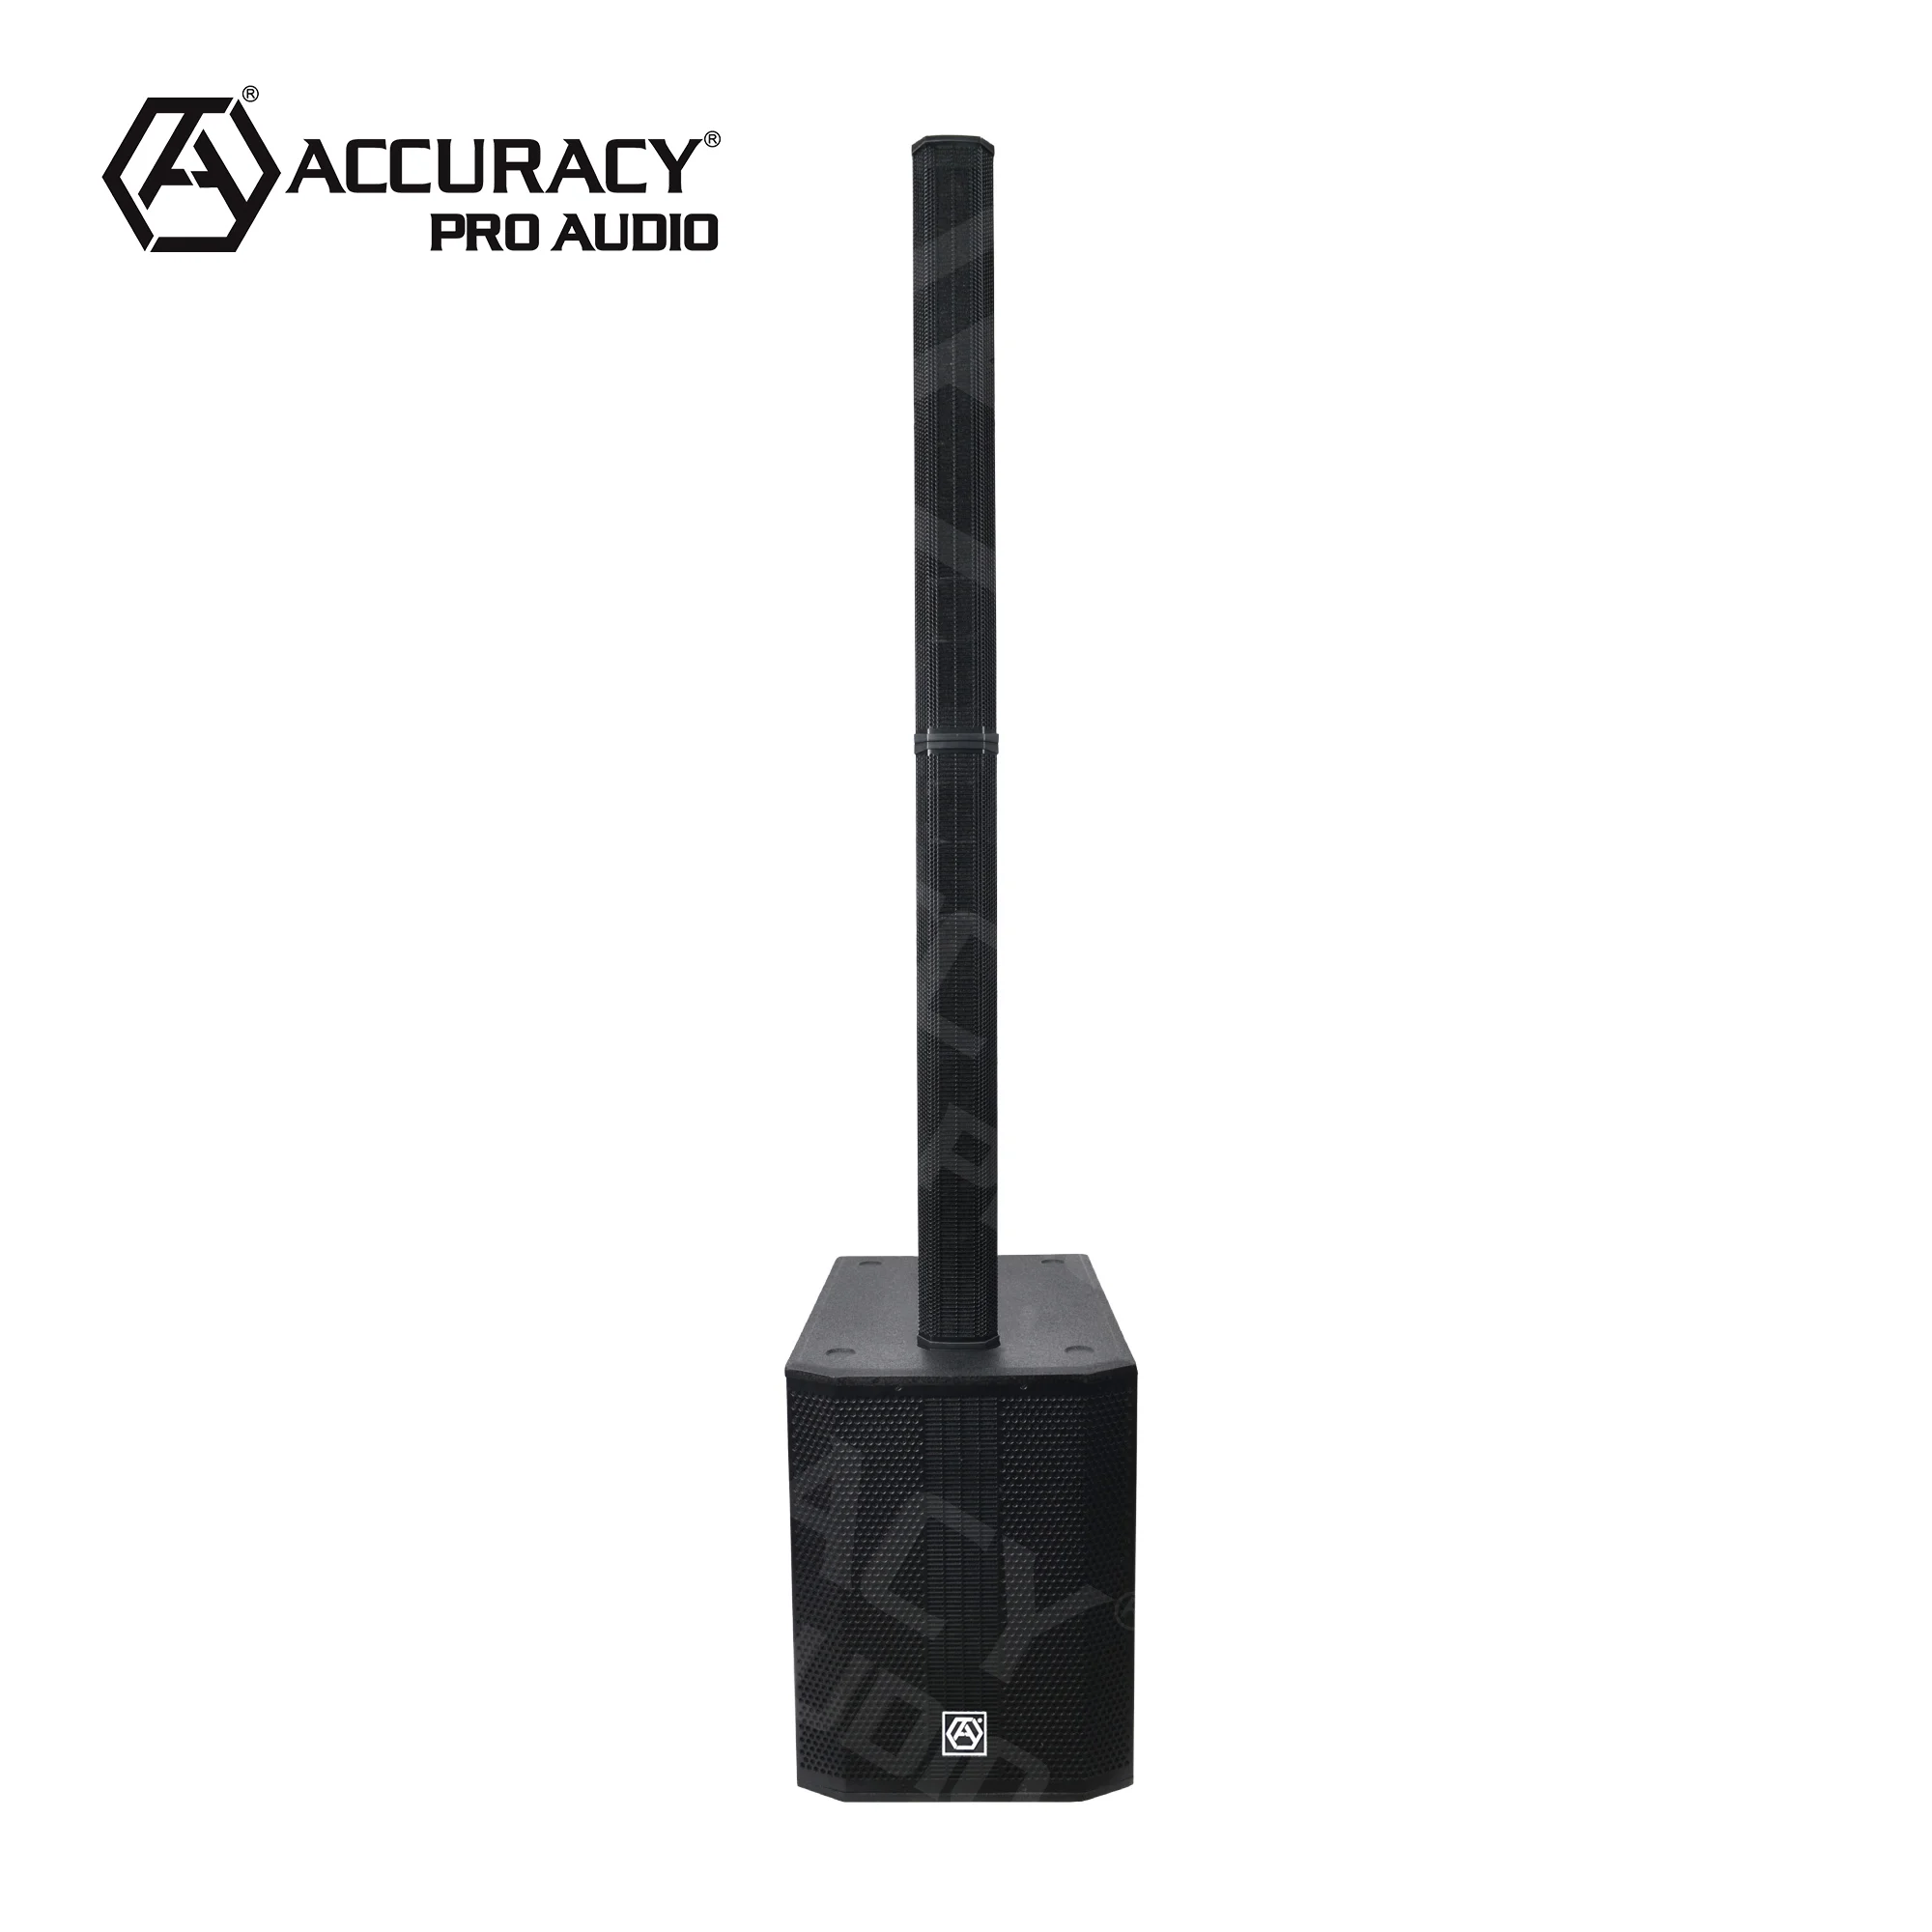 

Accuracy Pro Audio AC35 Patent module dj karaoke party portable subwoofer speaker PA system column speakers sound box